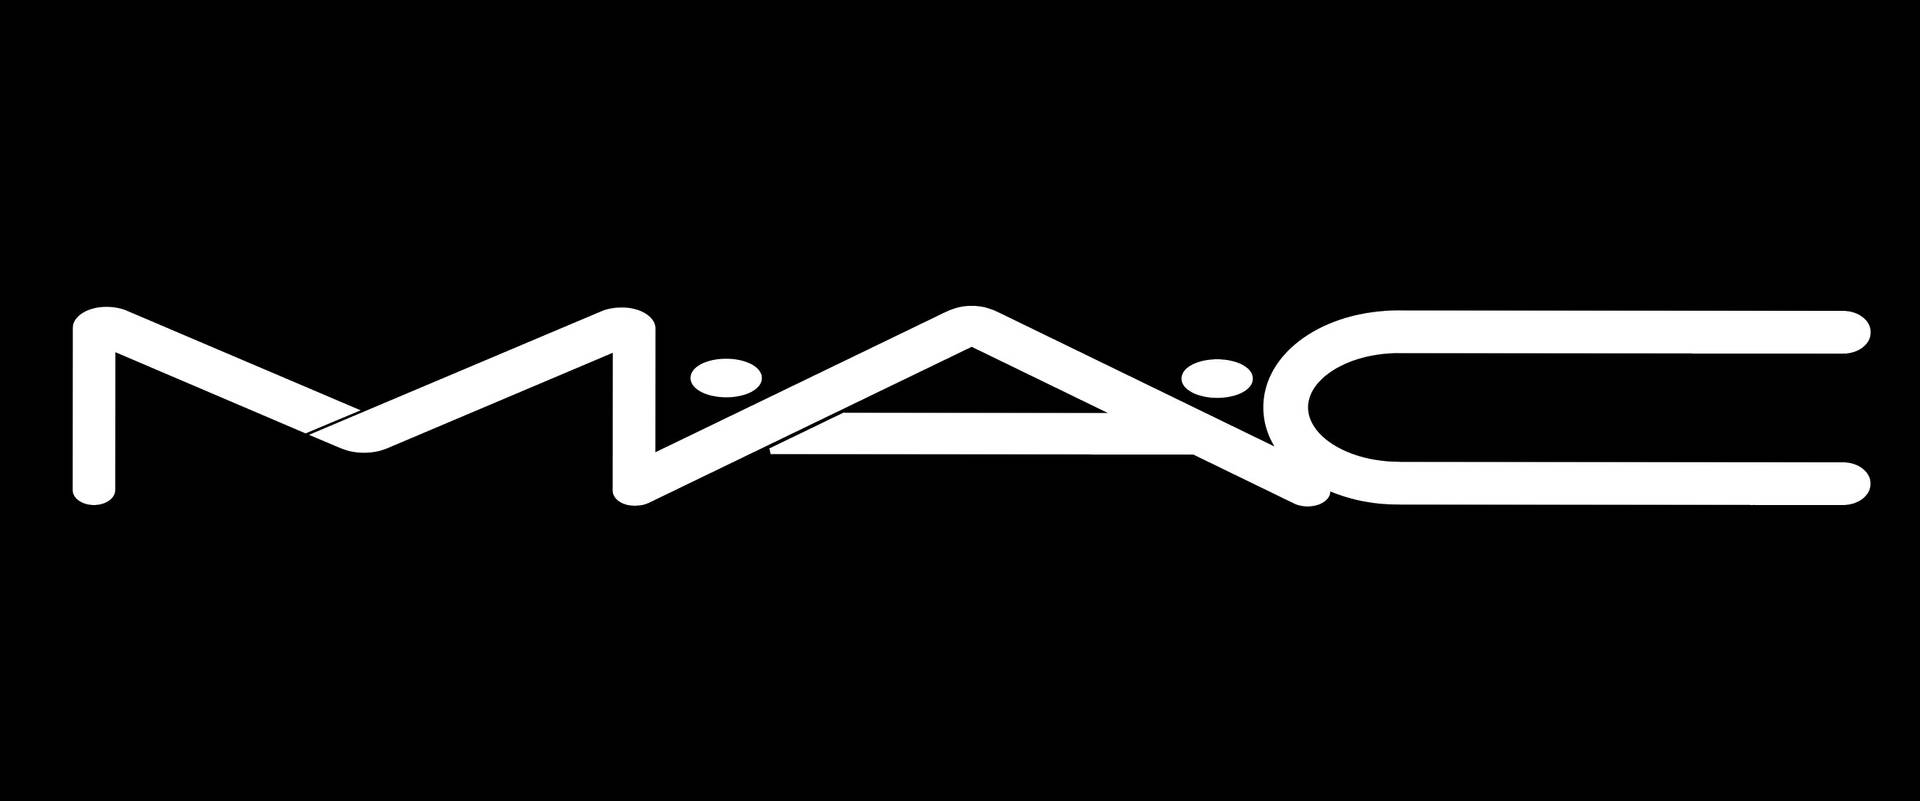 Logoclássico Da Mac Cosmetics. Papel de Parede